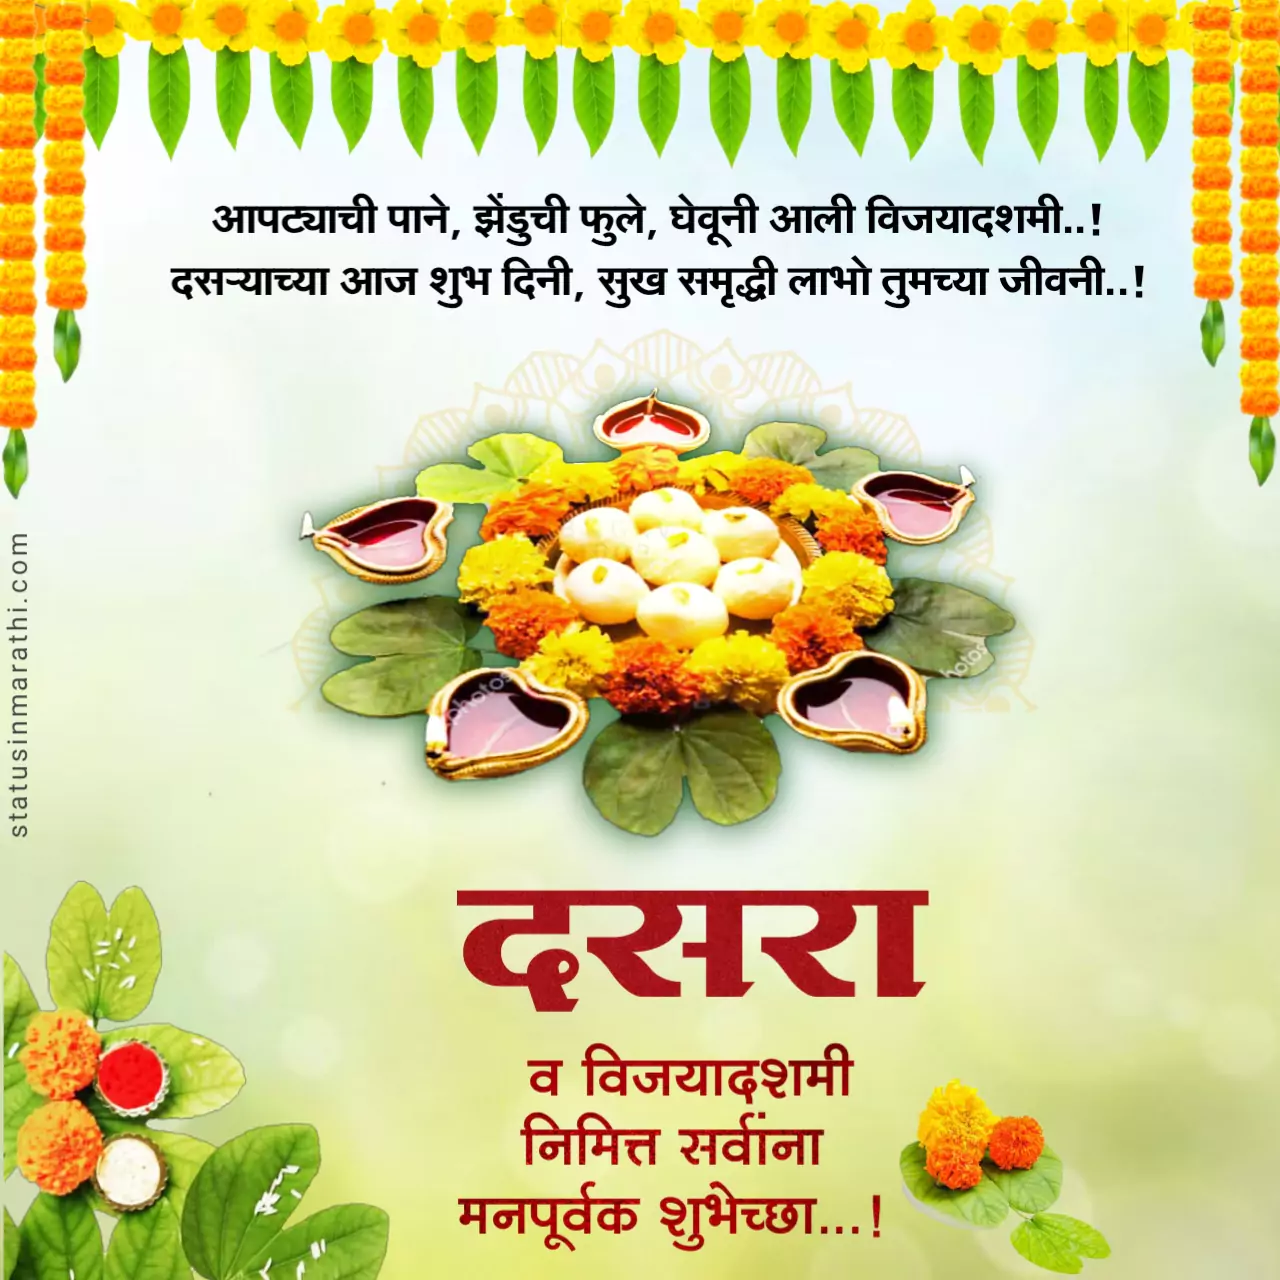 Dasara wishes in marathi